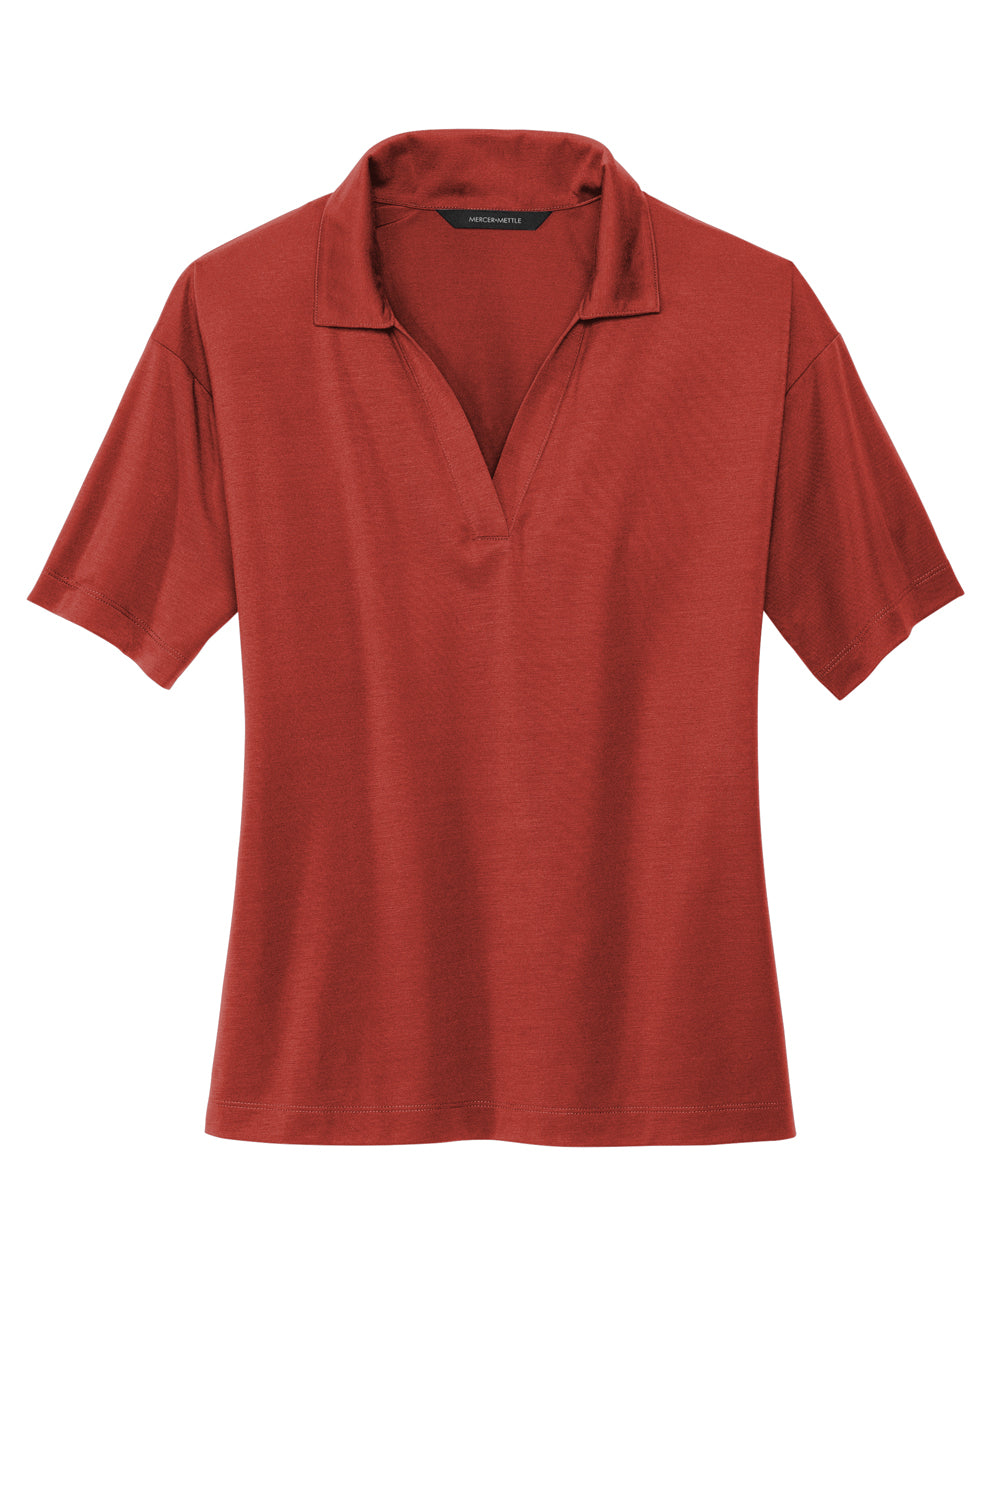 Mercer+Mettle Womens Moisture Wicking Short Sleeve Polo Shirt Terracotta Red Flat Front